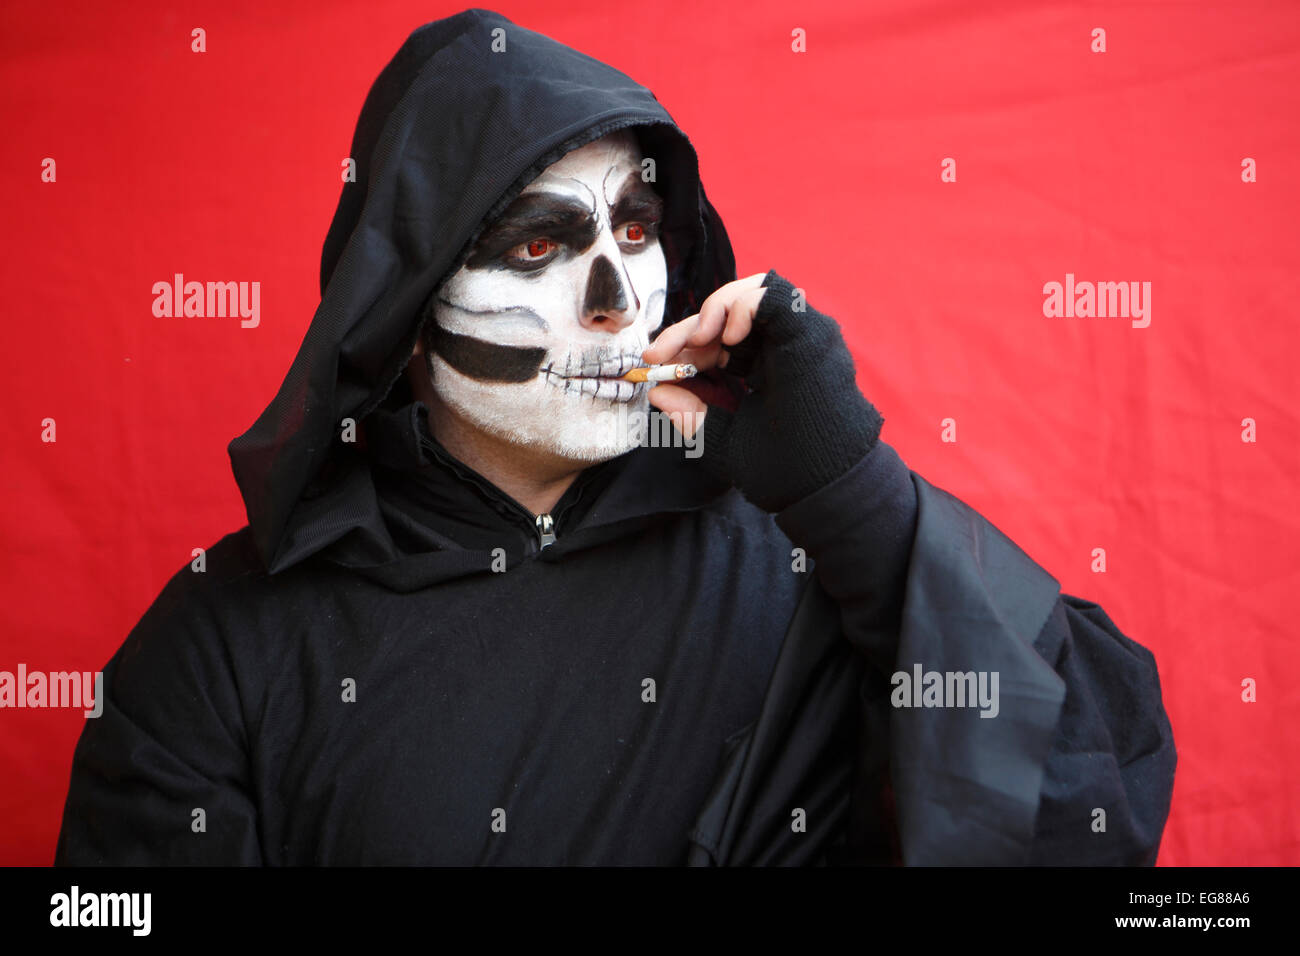 GER, 20150210, masked man Stock Photo